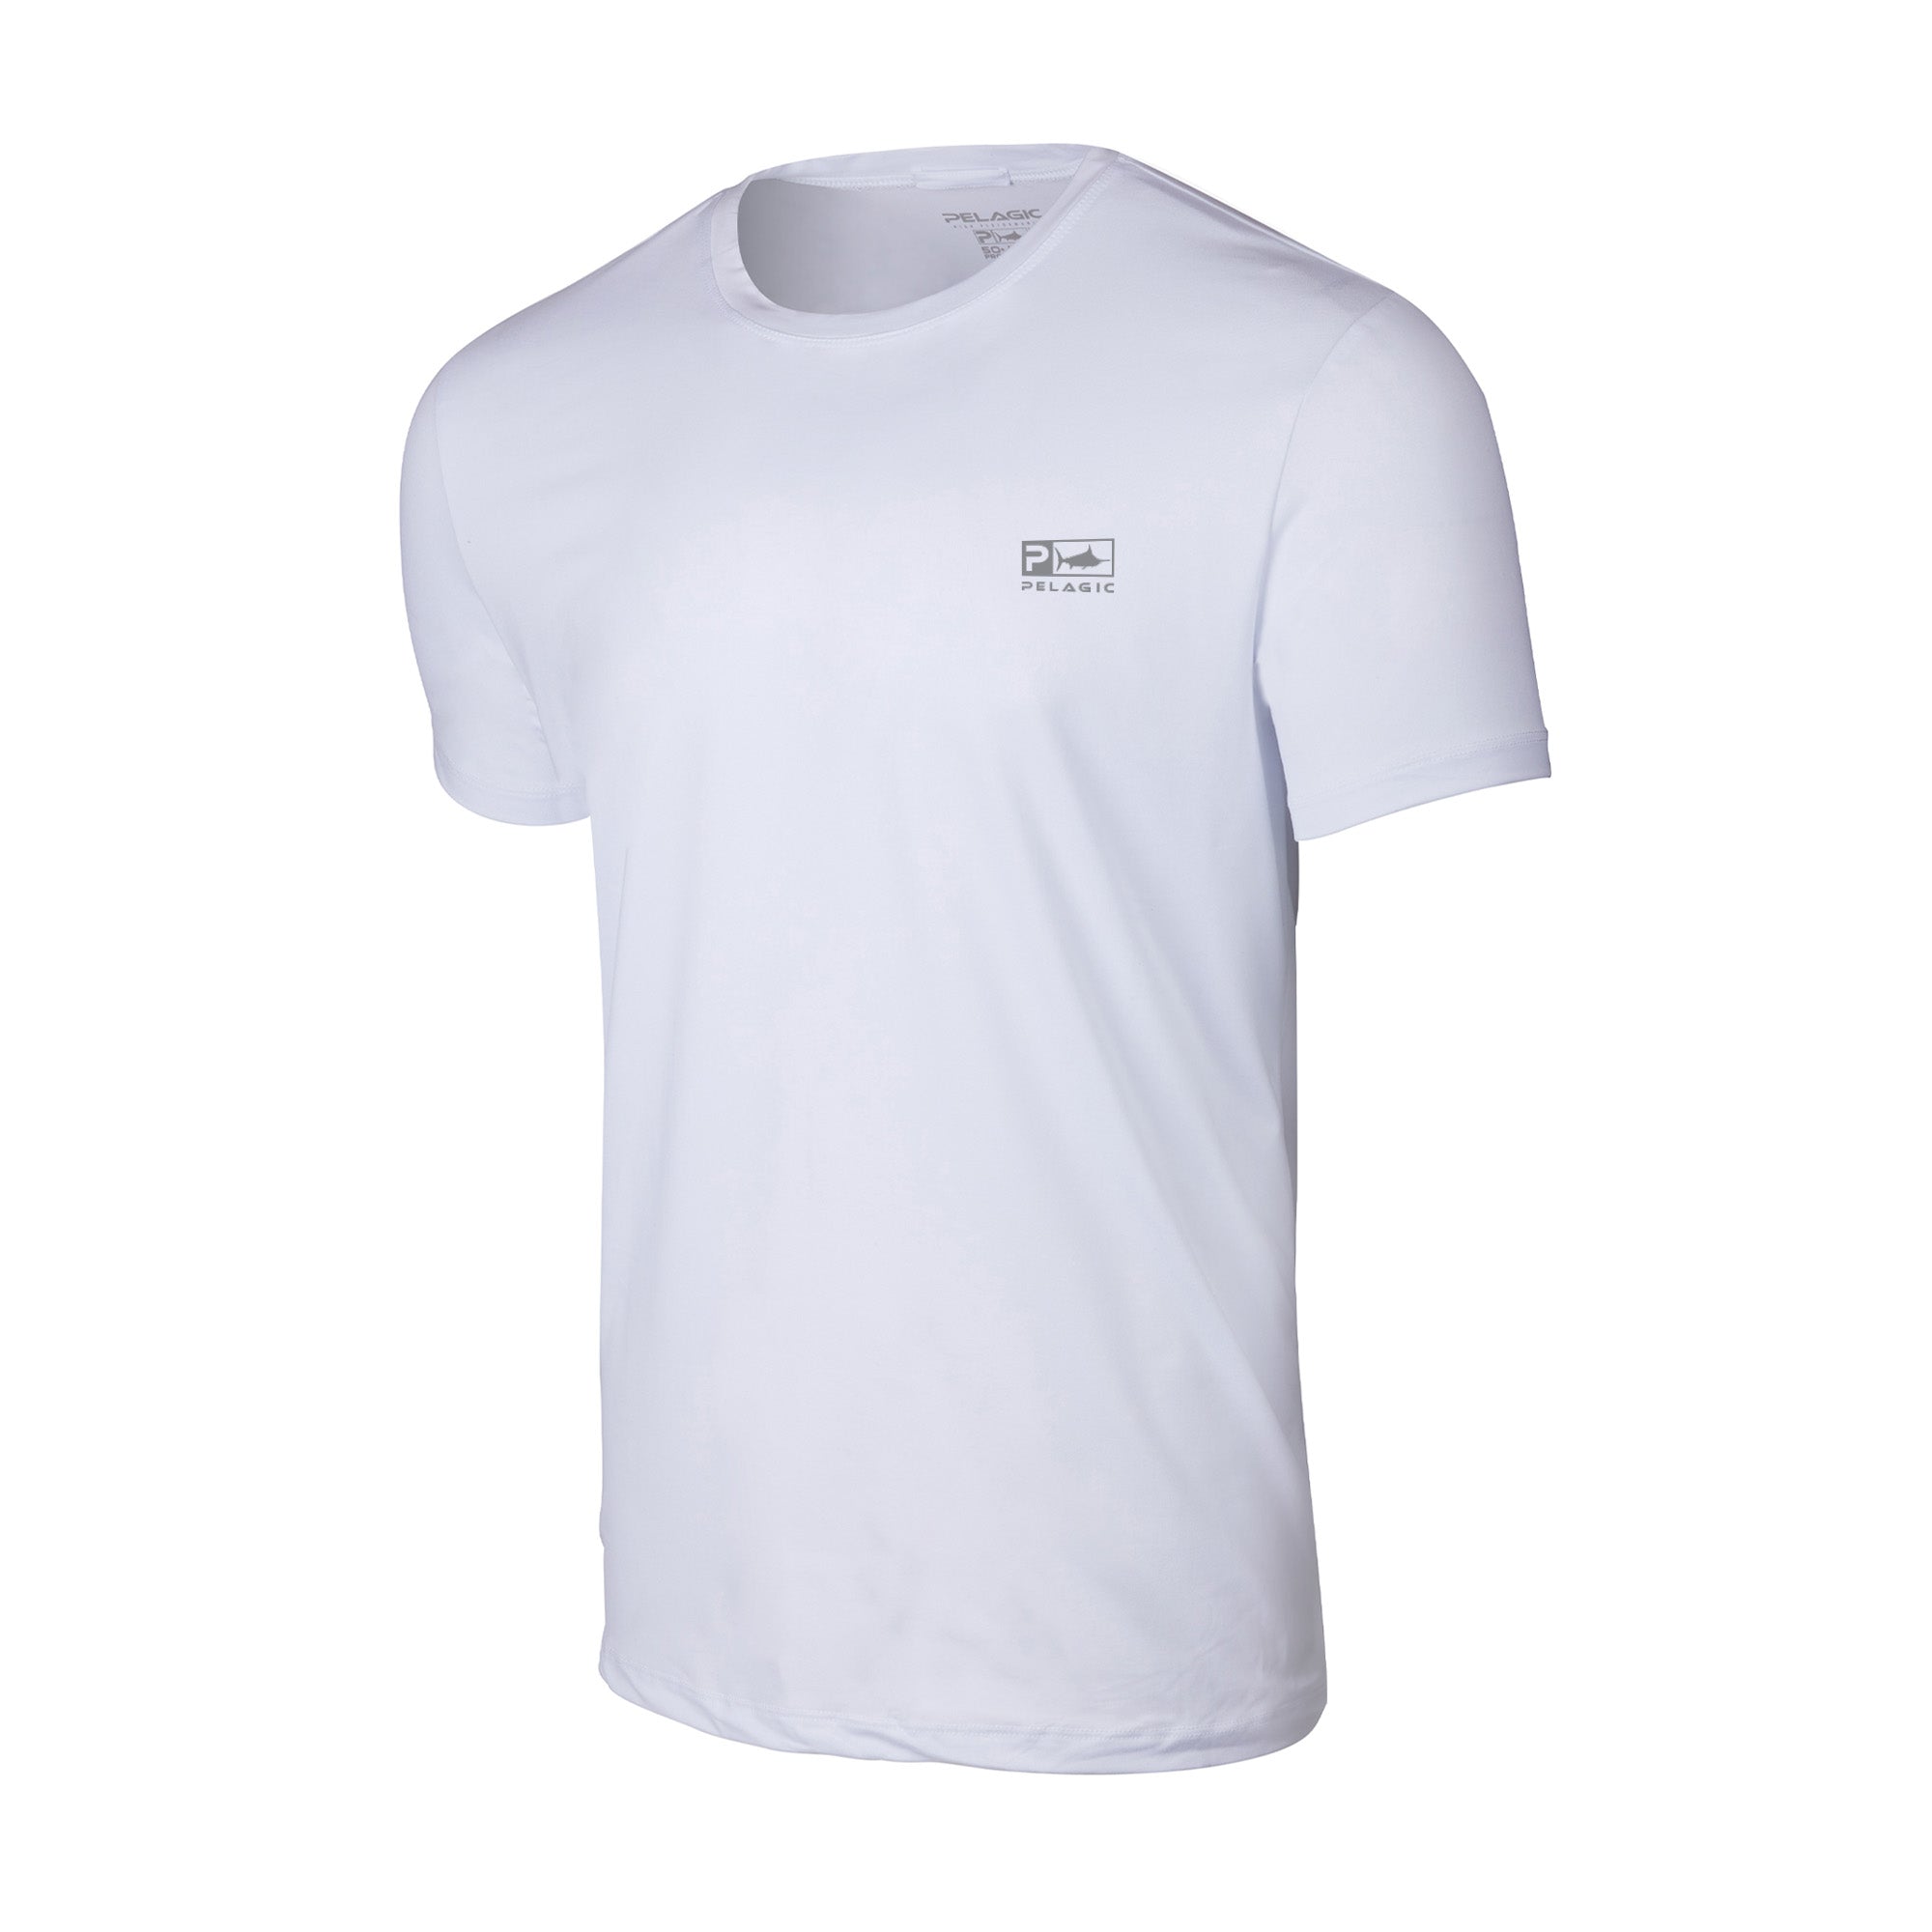 Pelagic Men’s Stratos Performance T-Shirt